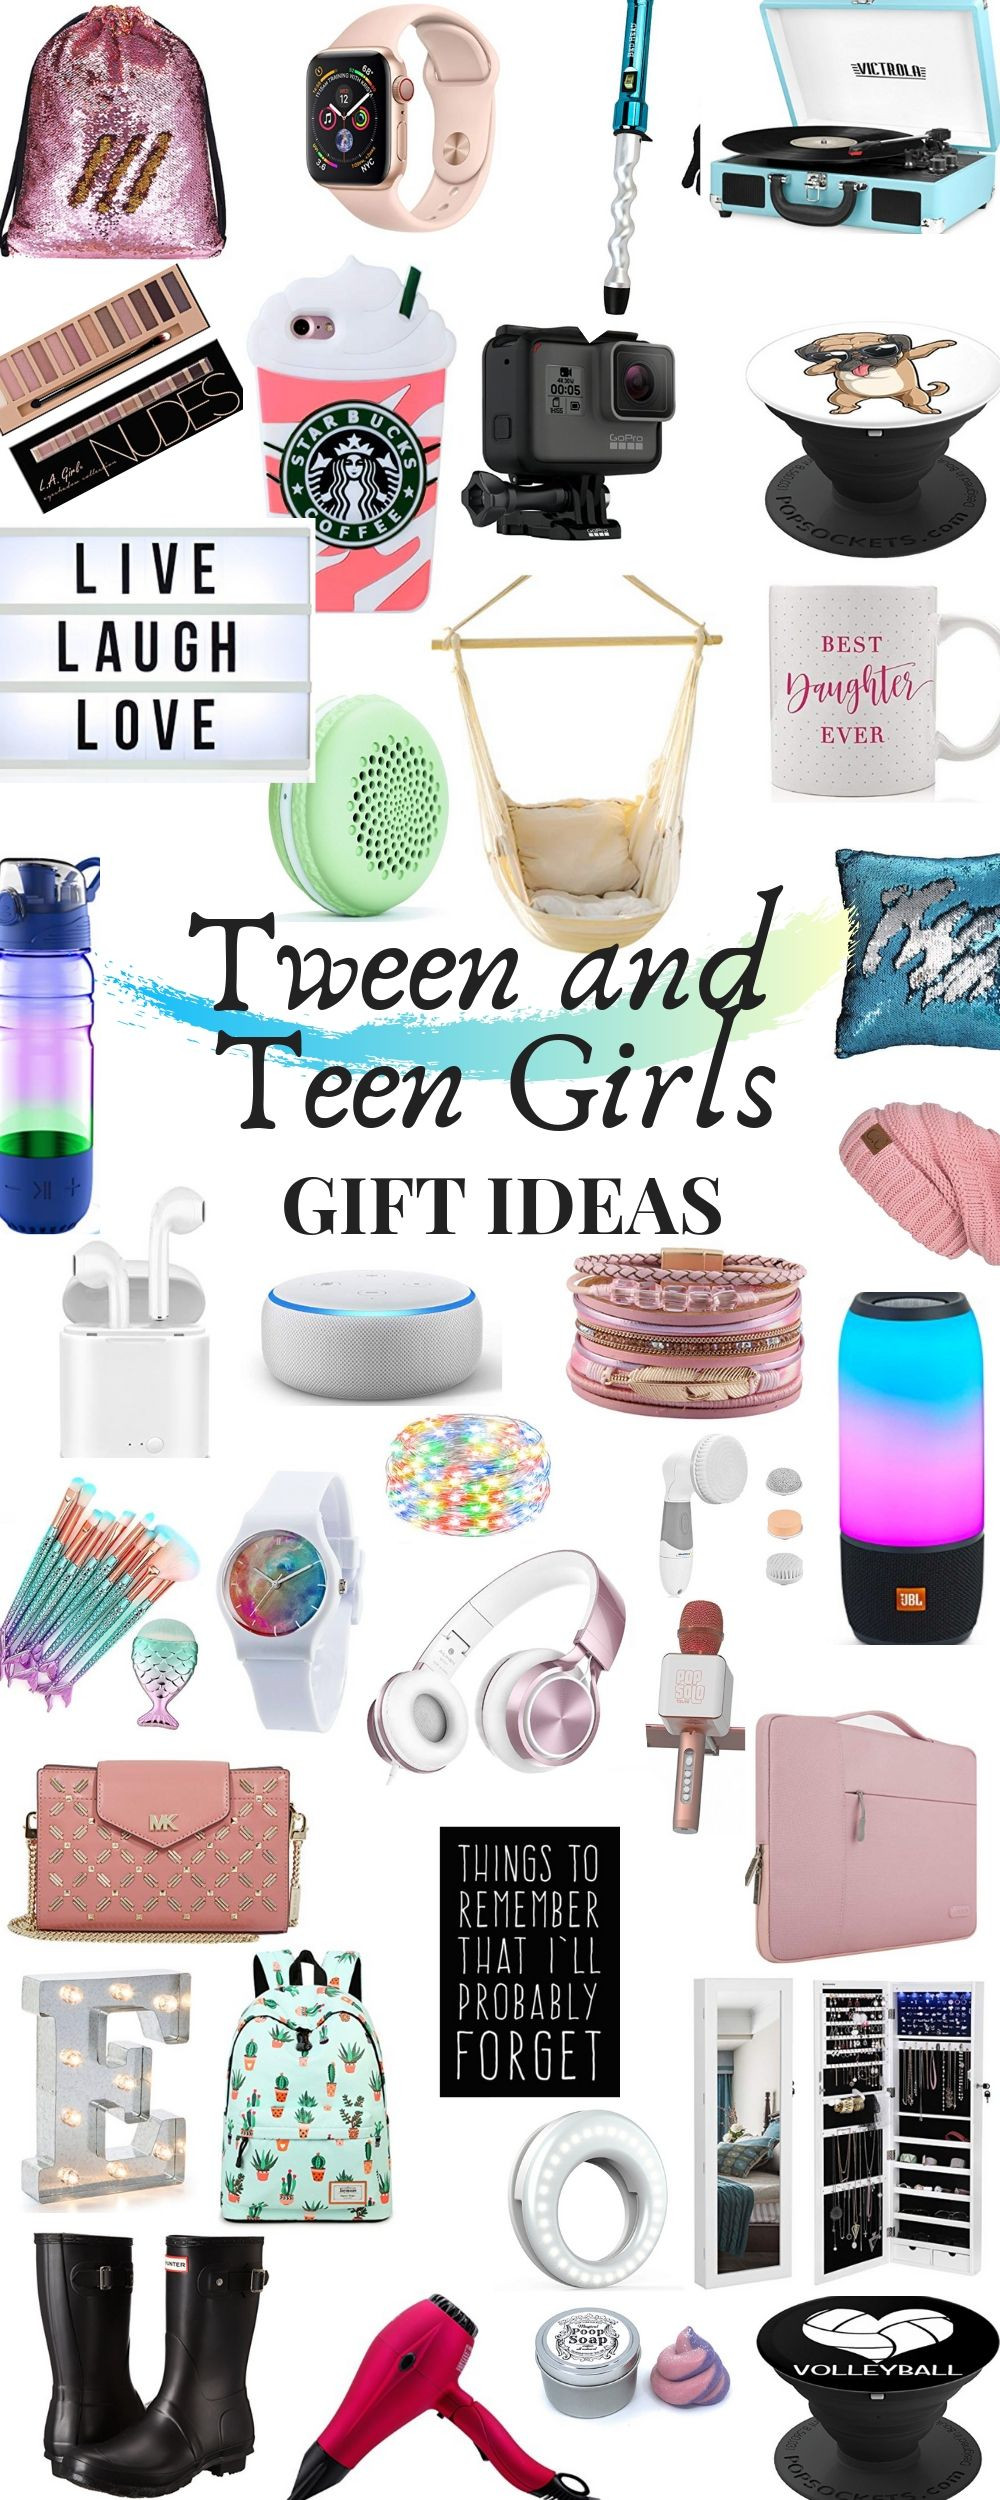 Top Gift Ideas For Teen Girls
 Teenage Girl and Tween Girl Gift Guide 2019